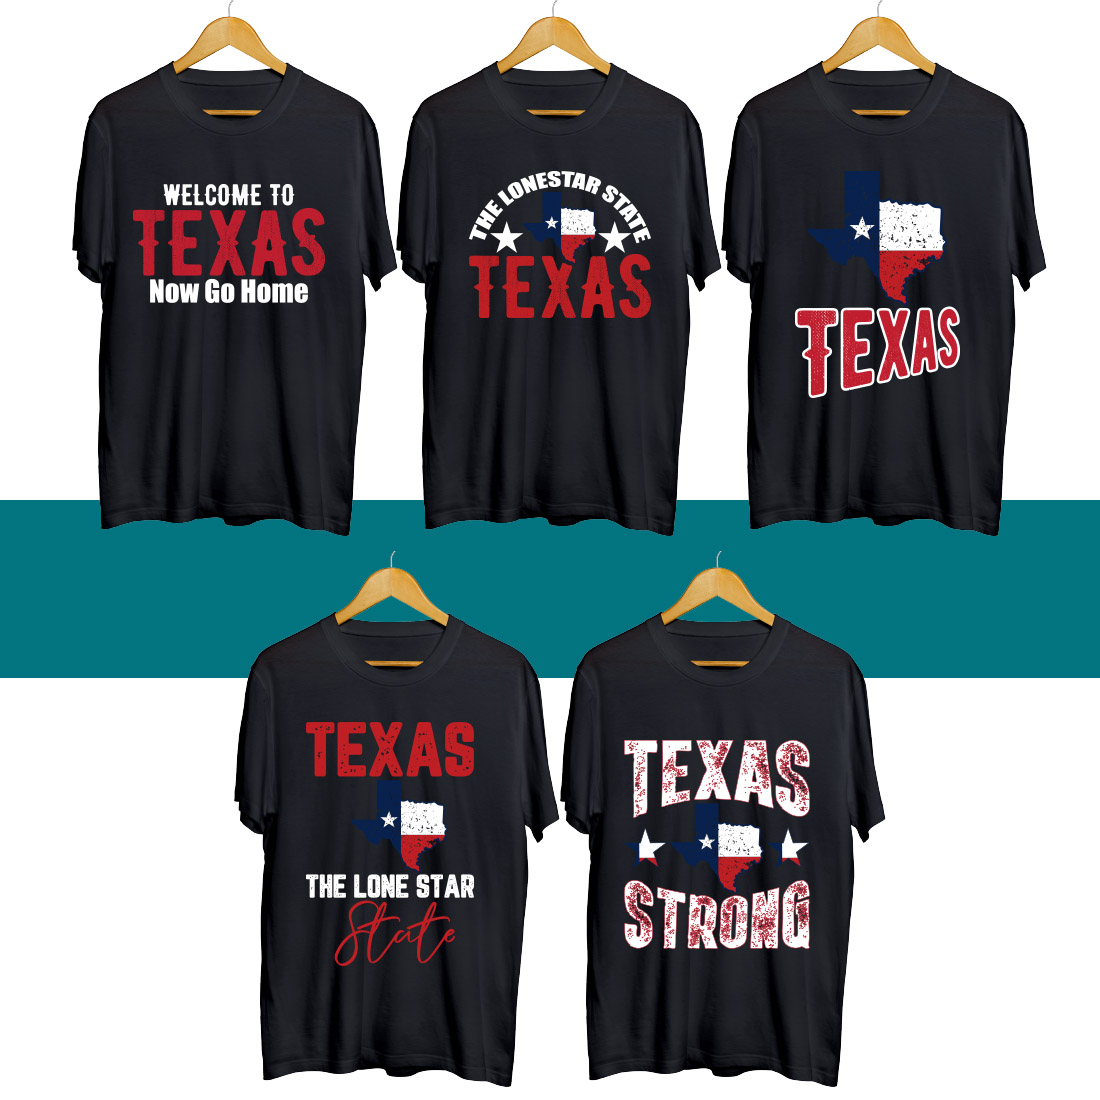 Texas Day SVG T Shirt Designs Bundle cover image.